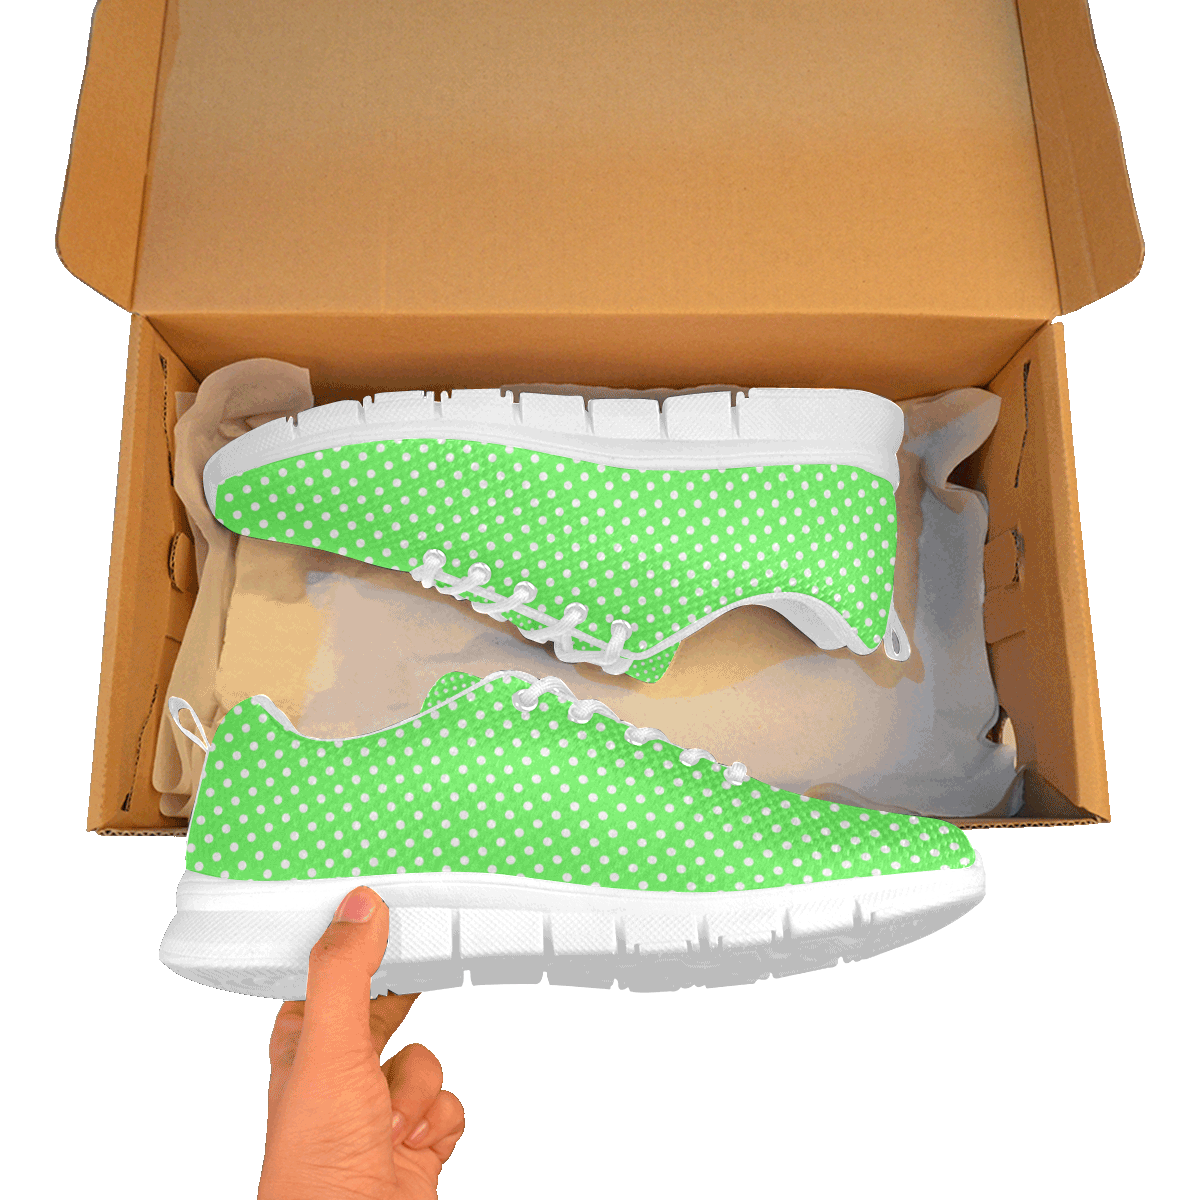 Eucalyptus green polka dots Women's Breathable Running Shoes/Large (Model 055)